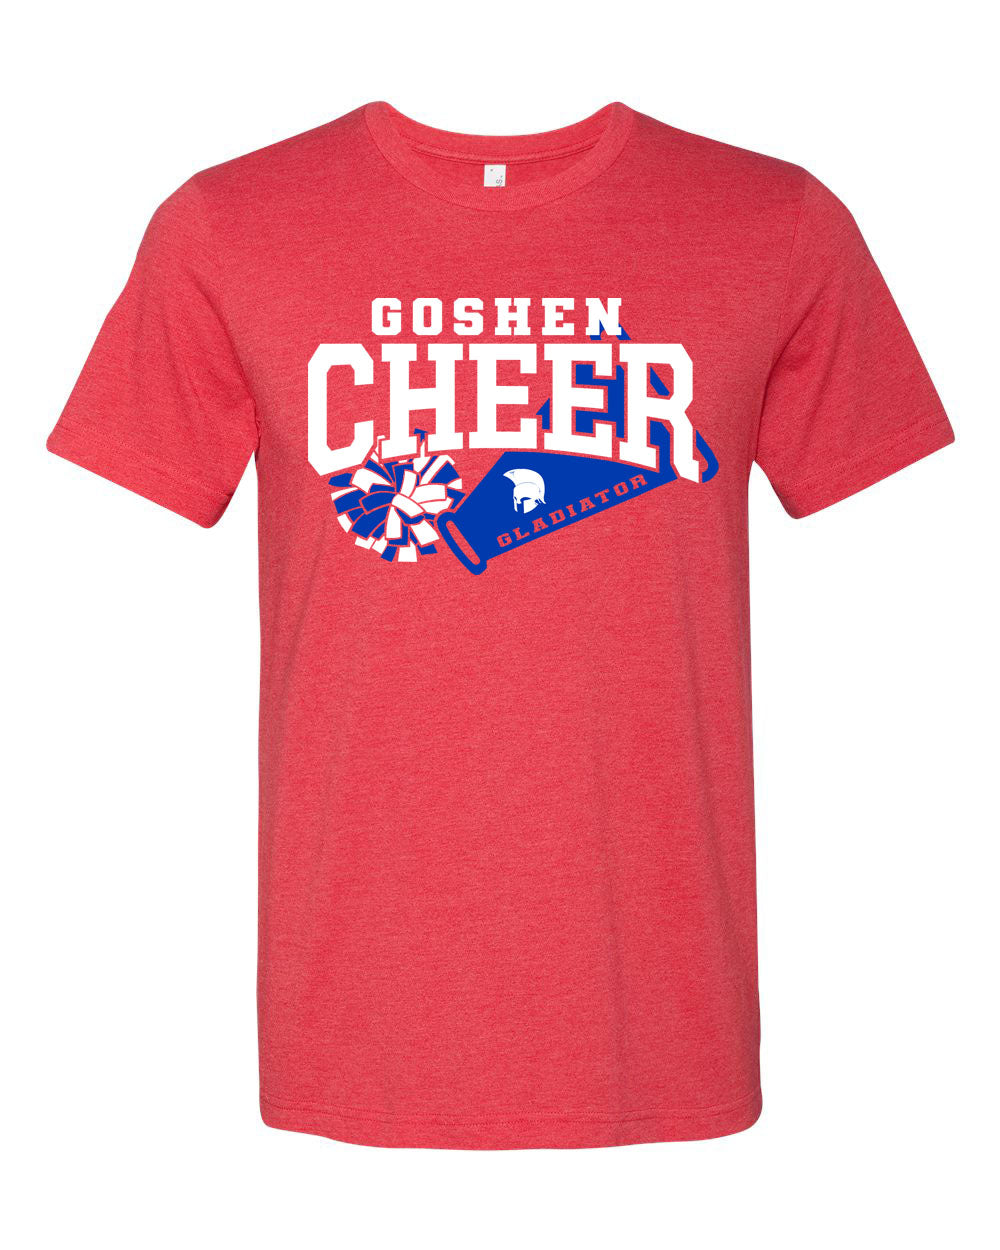 Goshen Cheer Design 5 T-Shirt